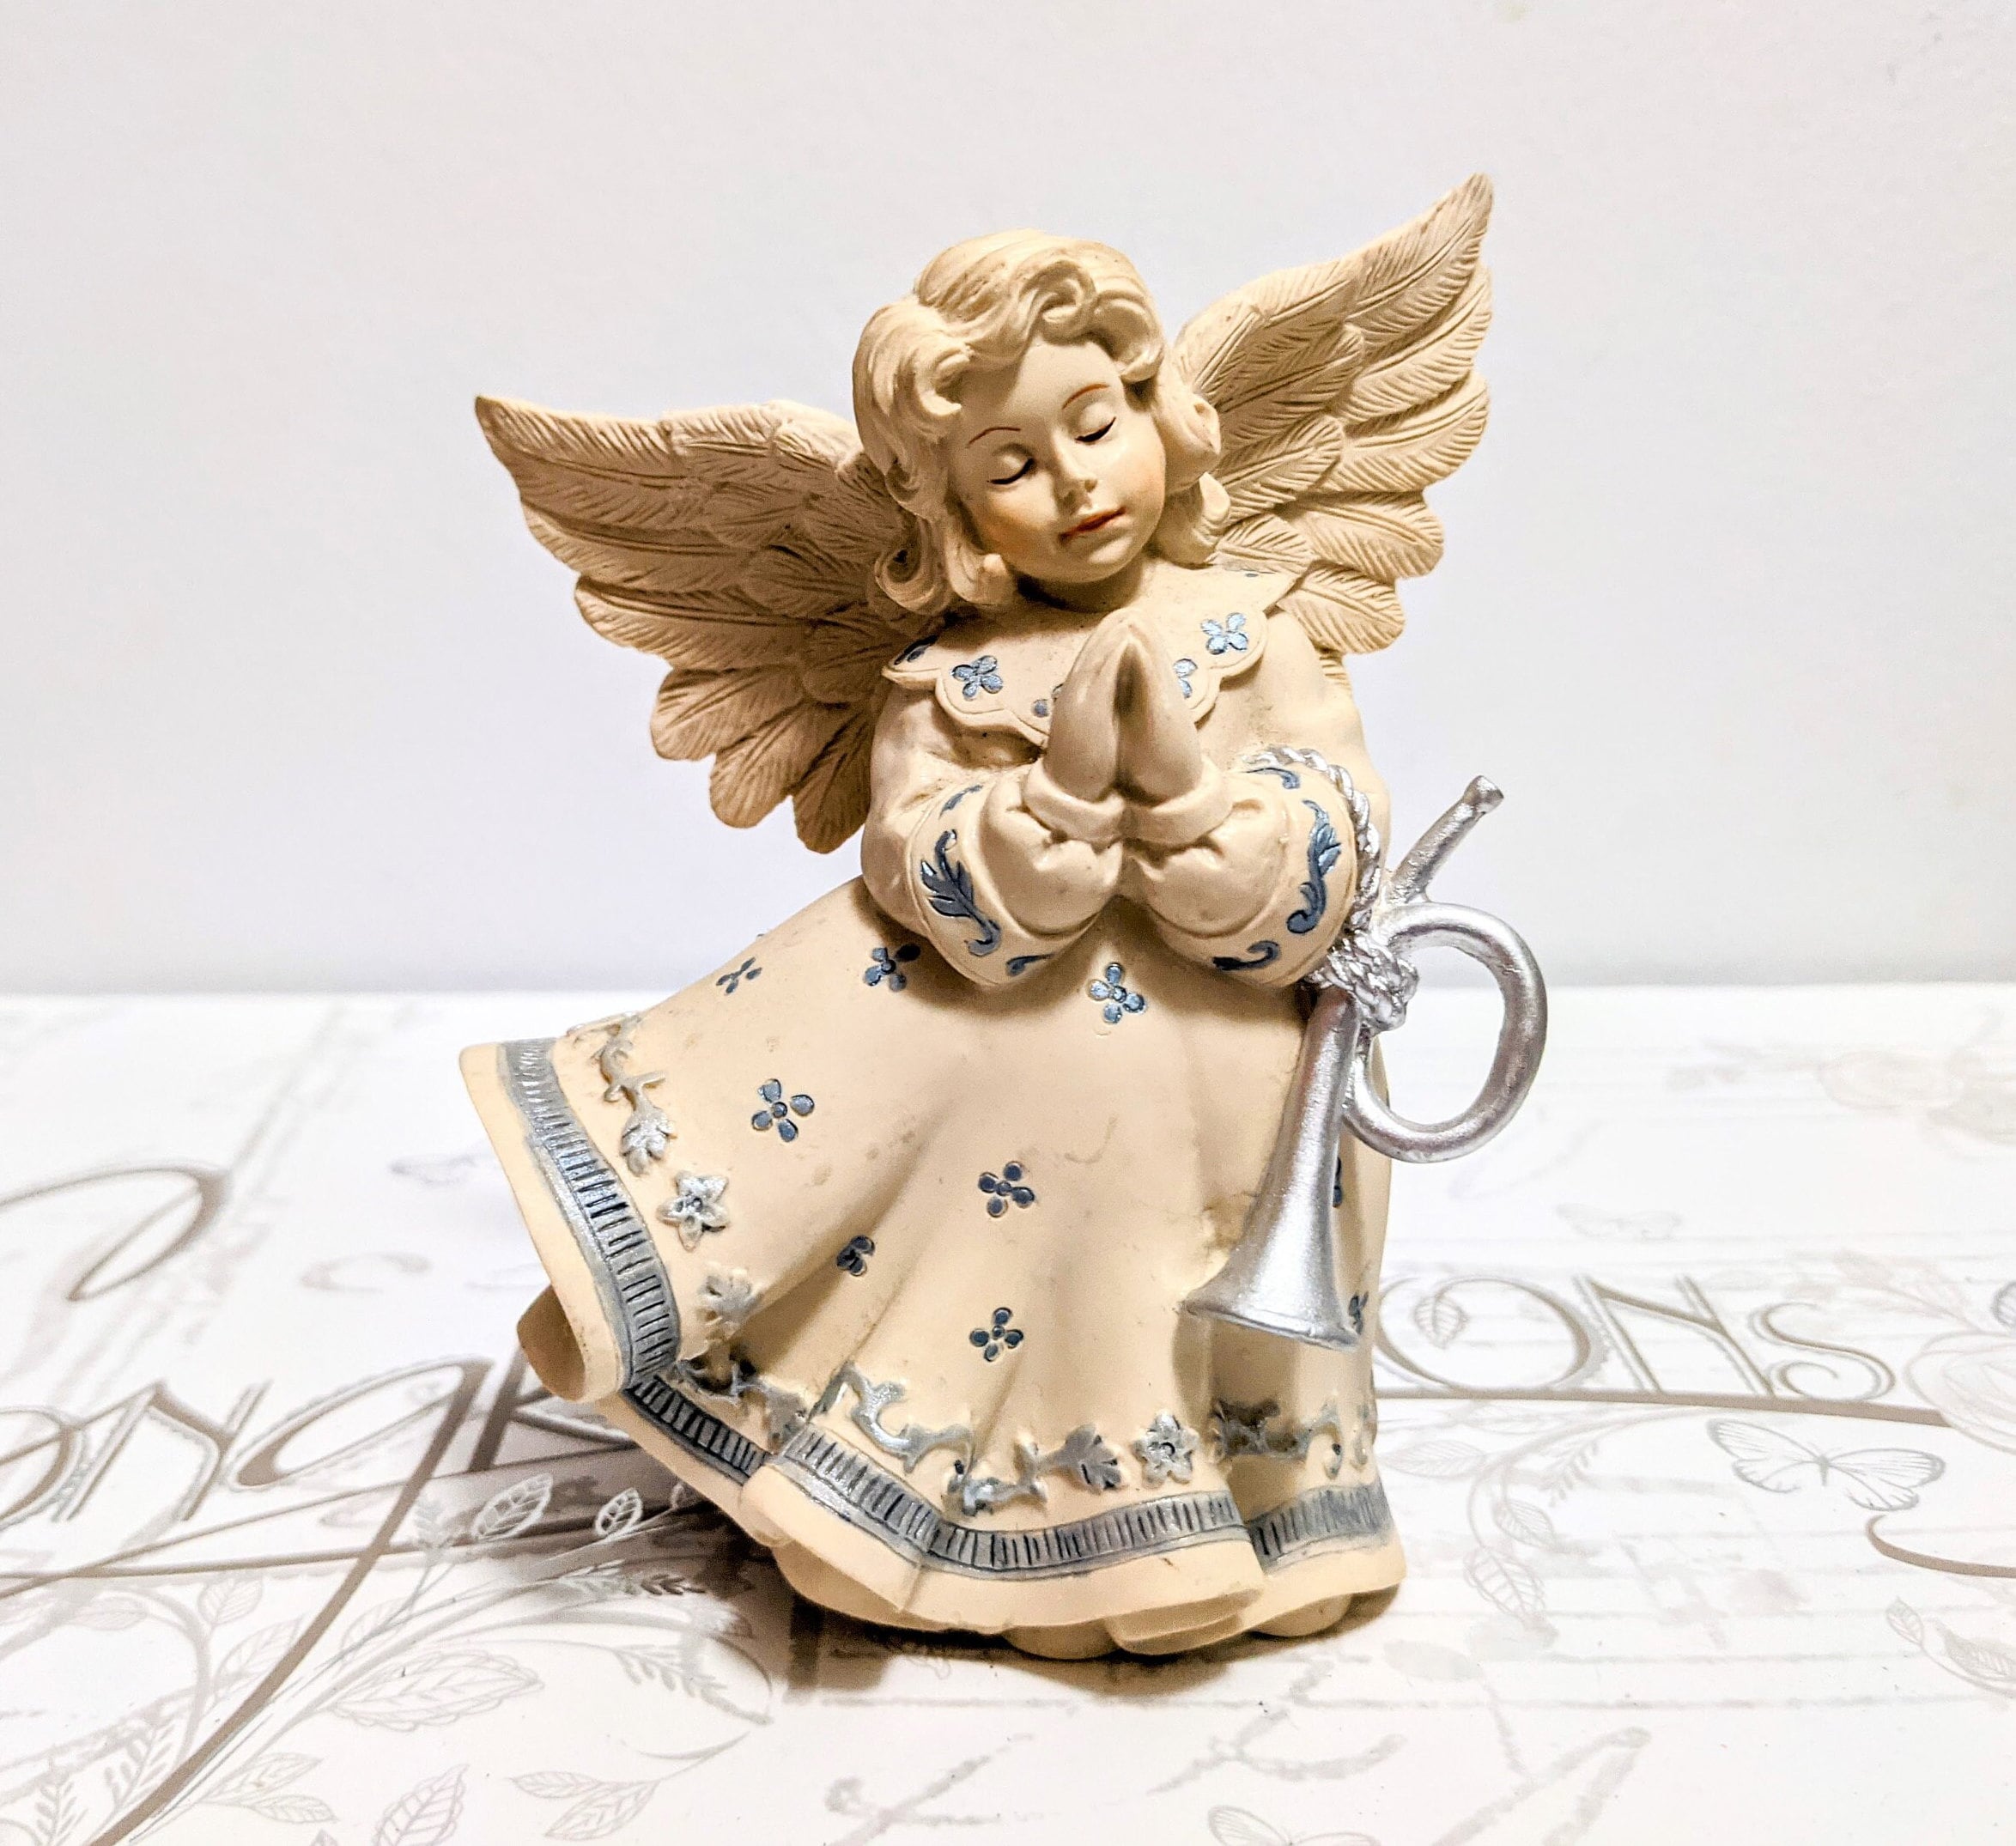 Angel Figurines -  Canada